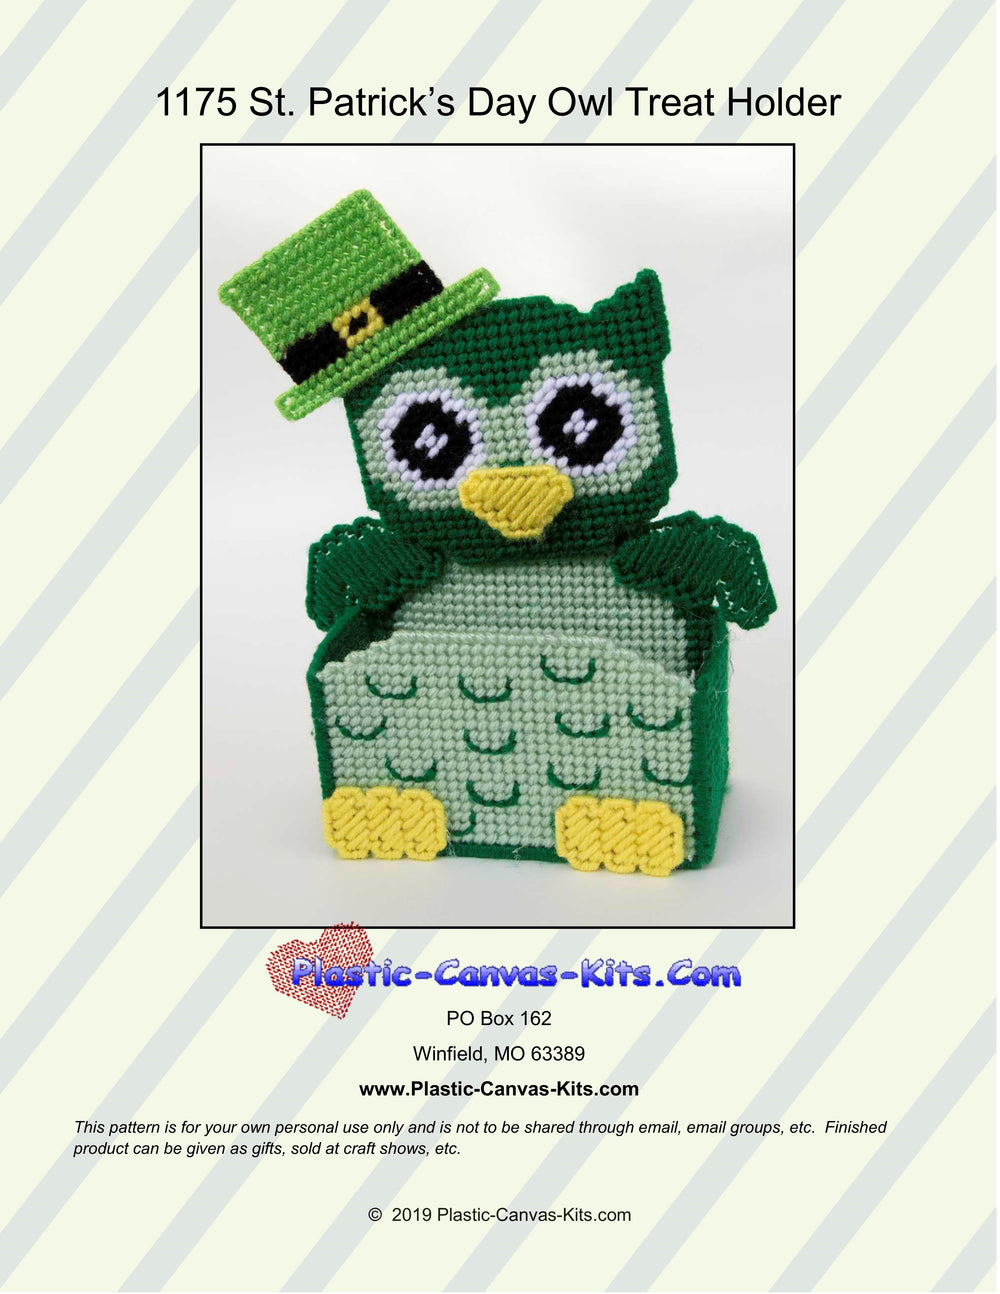 St. Patrick's Day Owl Treat Holder